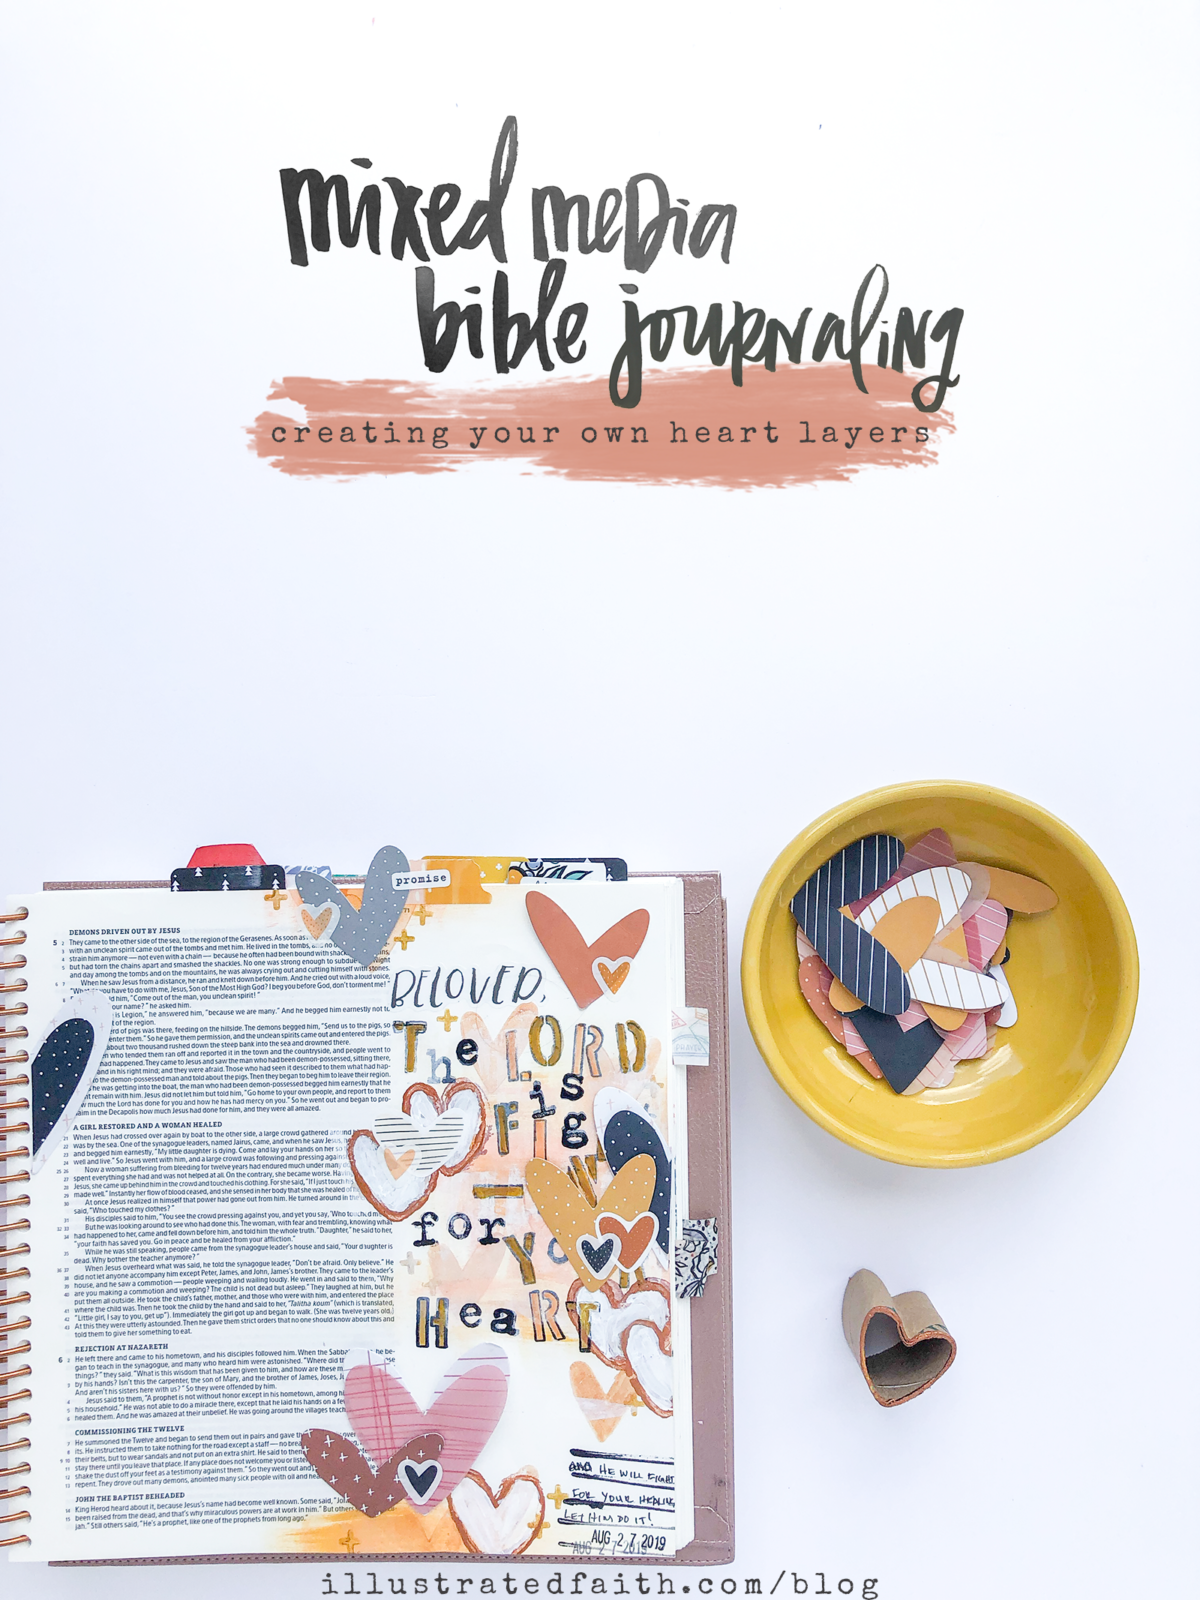 Give Thanks Bible Journaling Kit and Devotional - November 2019 Kit